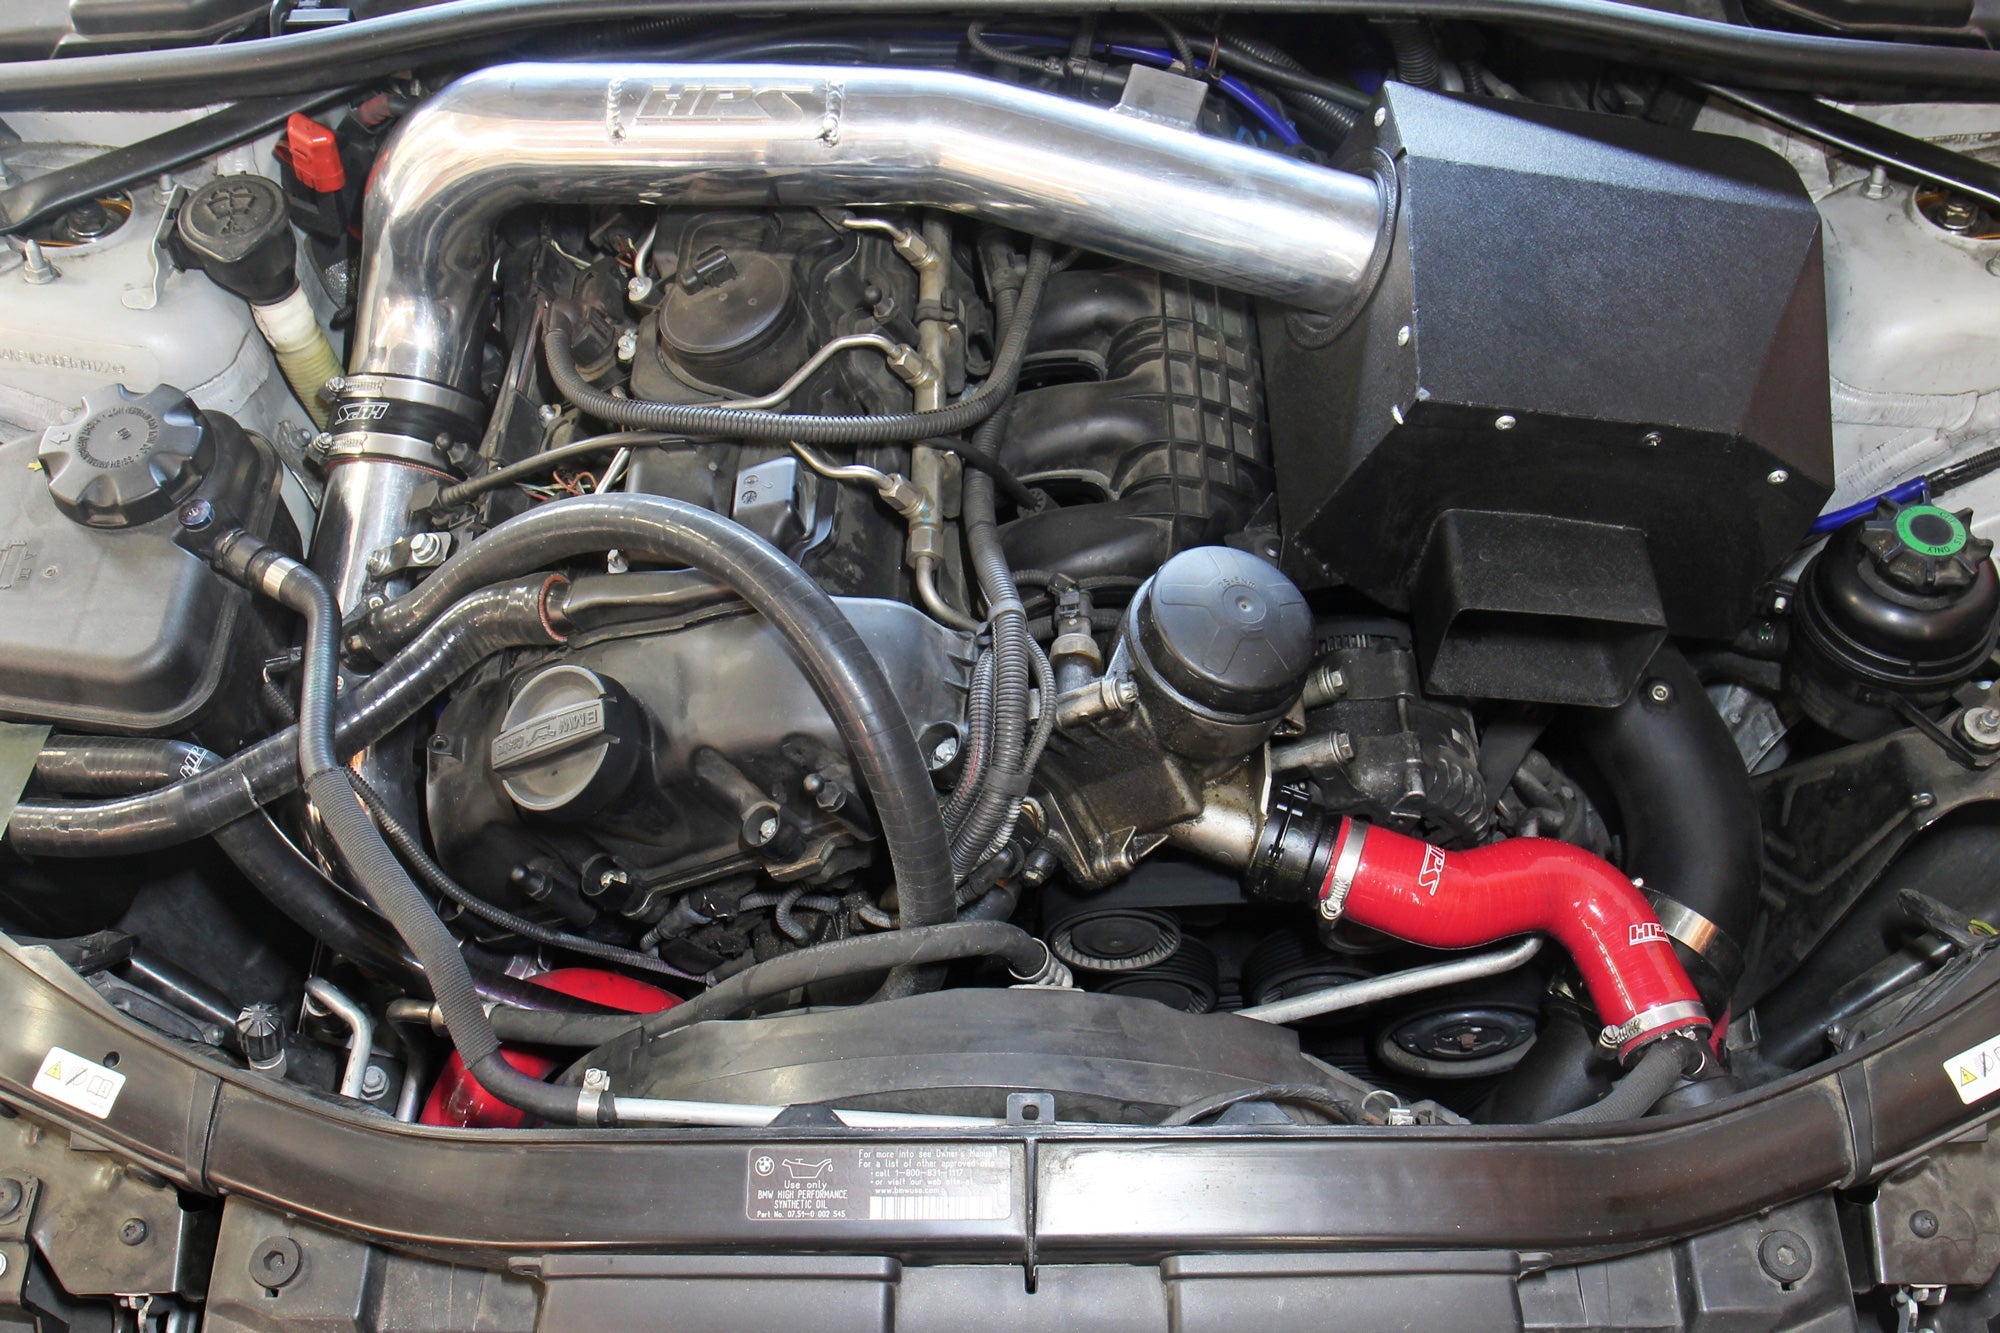 HPS Red Silicone Lower Upper Radiator Coolant Hoses Installed BMW 135i 3.0L Turbo N54 E88 E82